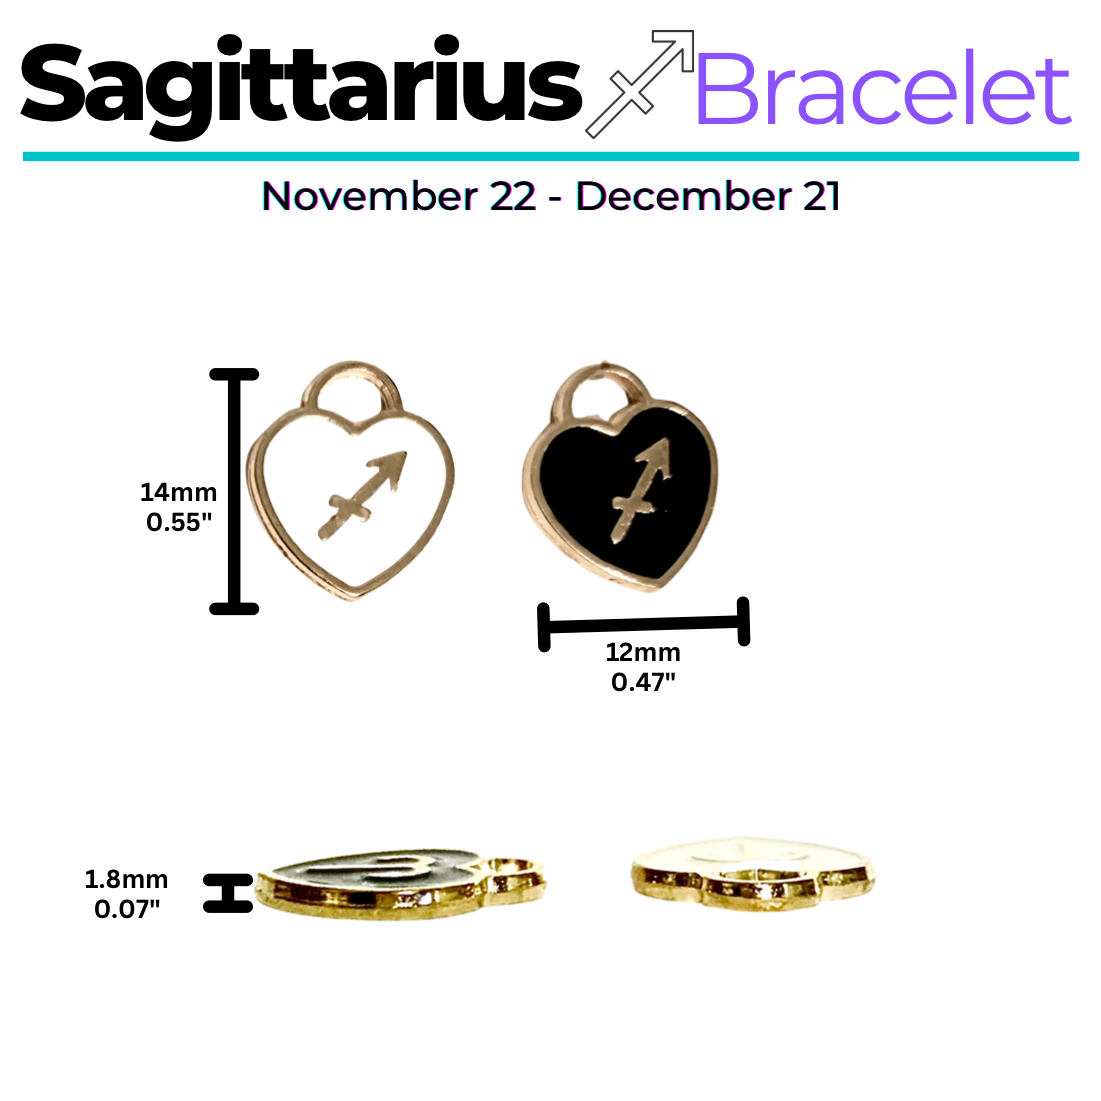 Sagittarius Bracelet showcasing Tigers Eye and Amethyst beads.